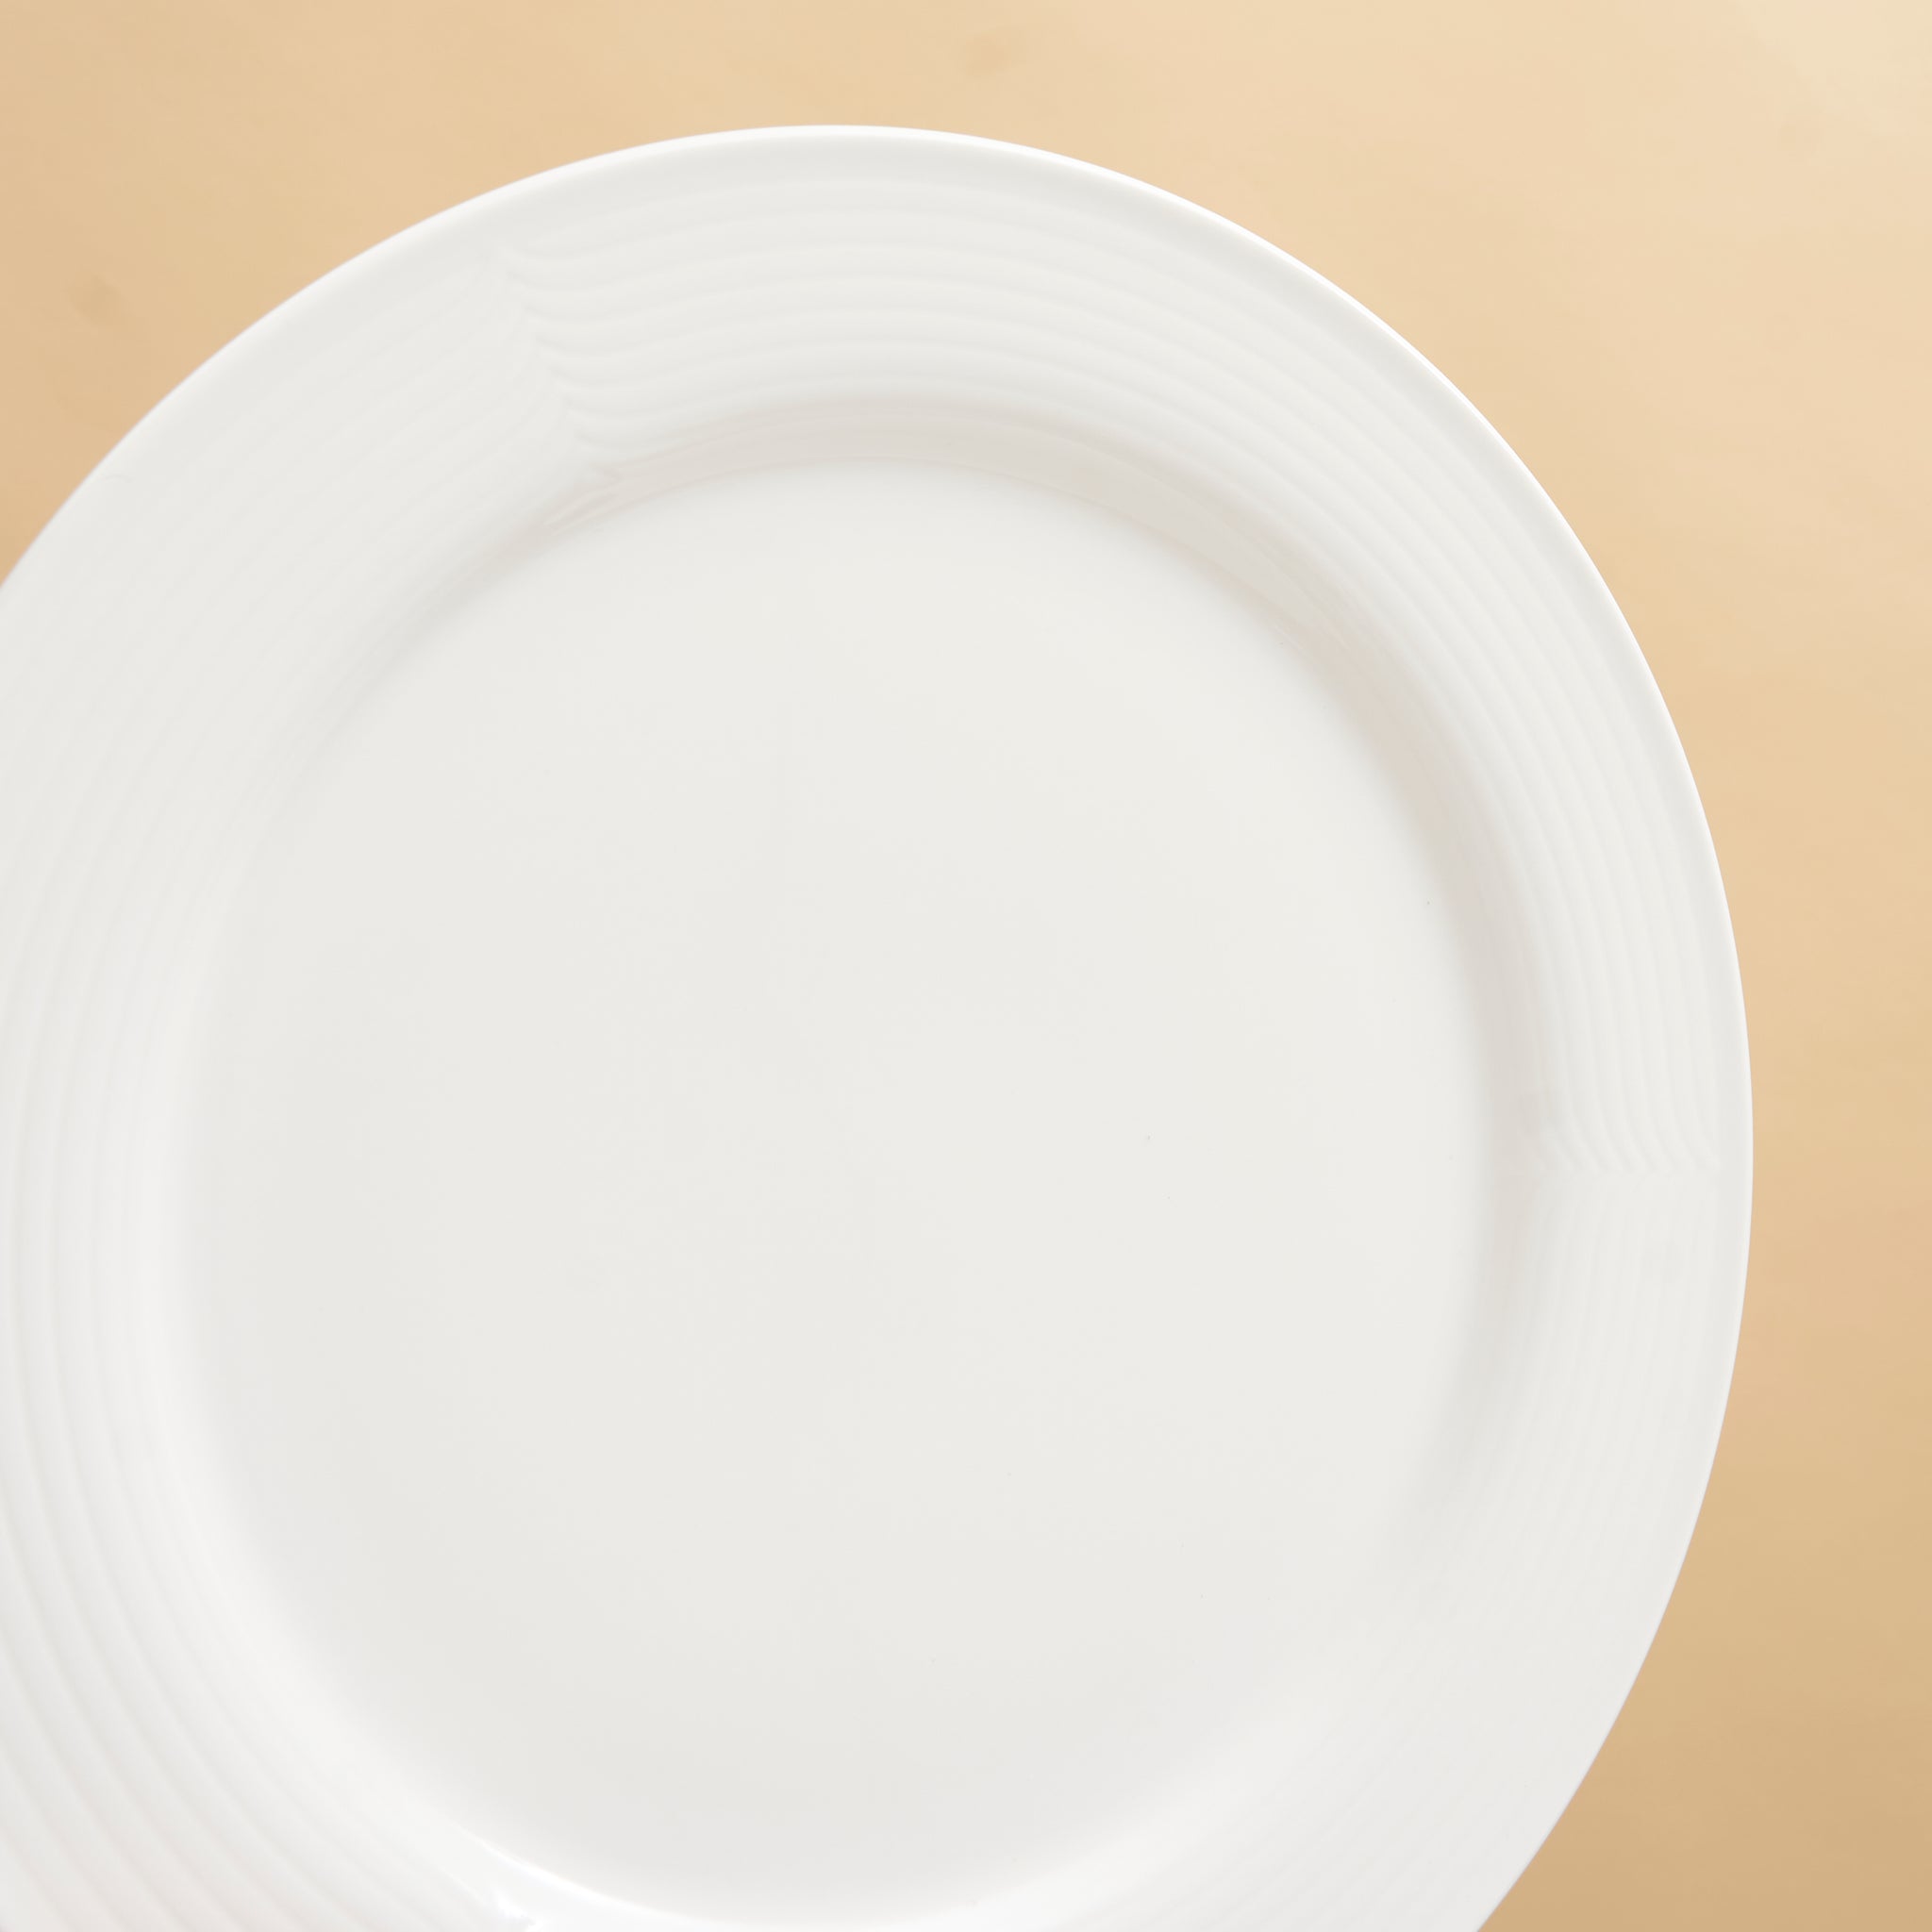 Brand New Set of 6 'Adriana' Porcelain Dinner Plates by Villeroy & Boch